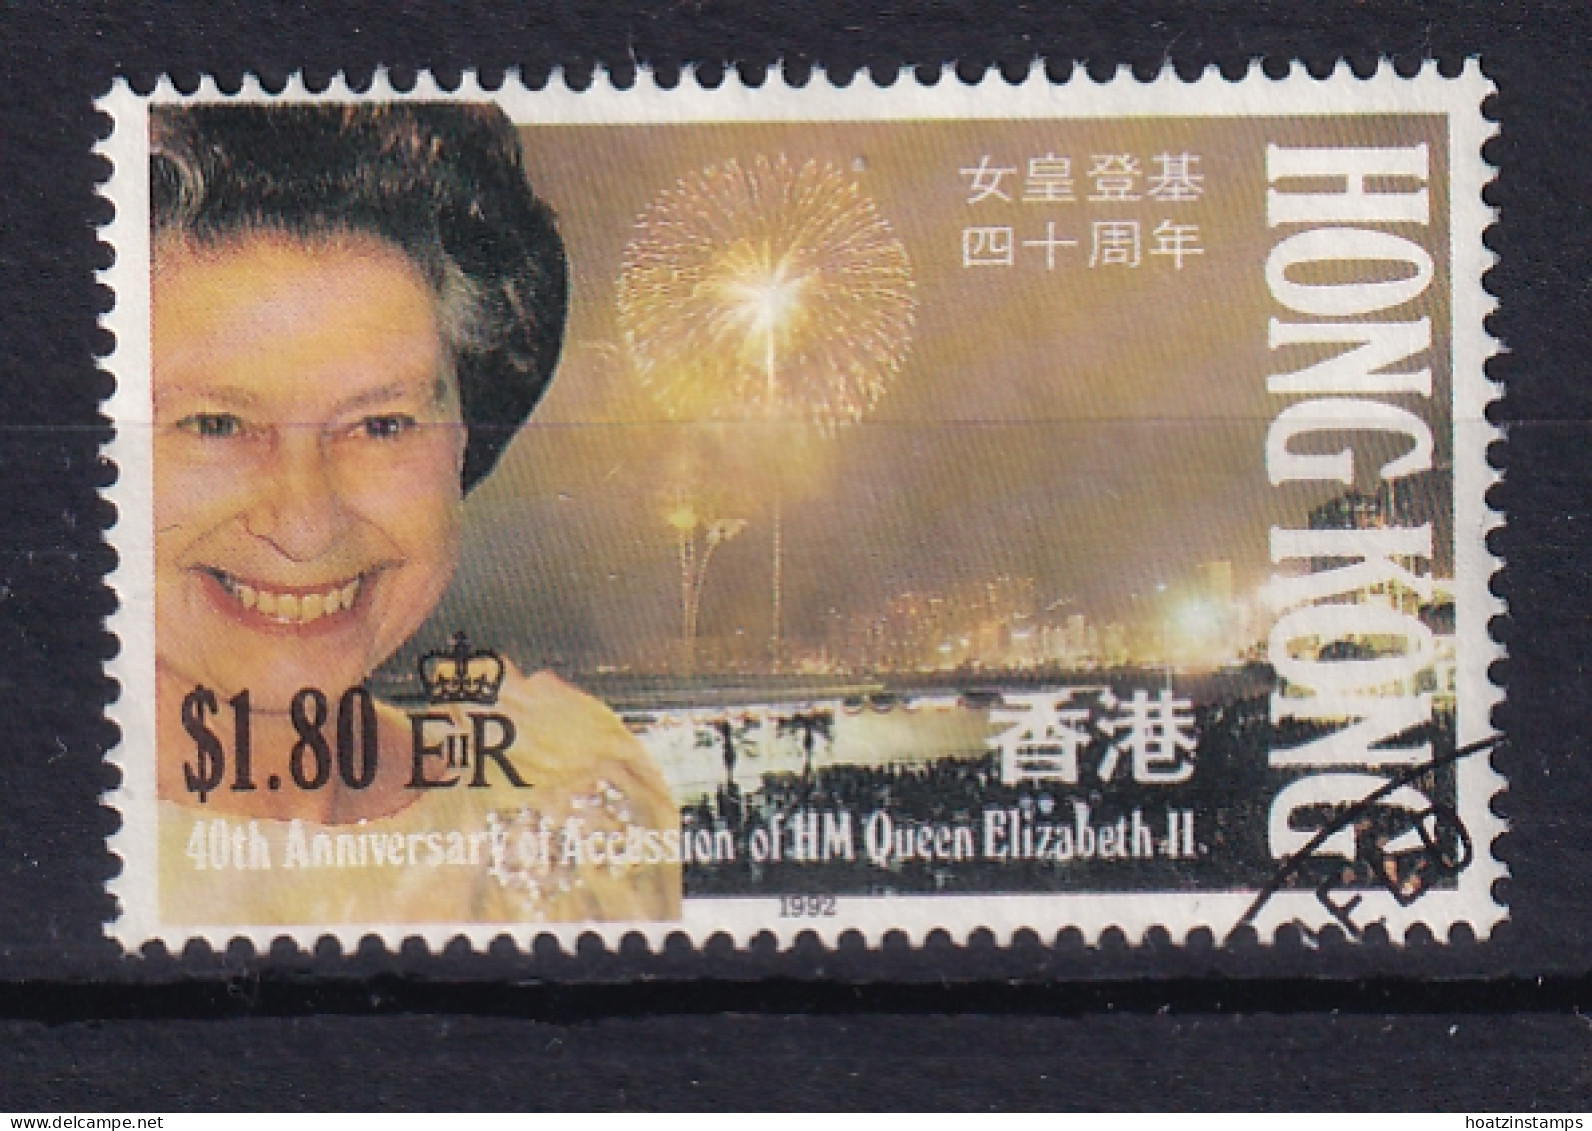 Hong Kong: 1992   40th Anniv Of QE II Accession   SG693    $1.80   Used  - Gebruikt